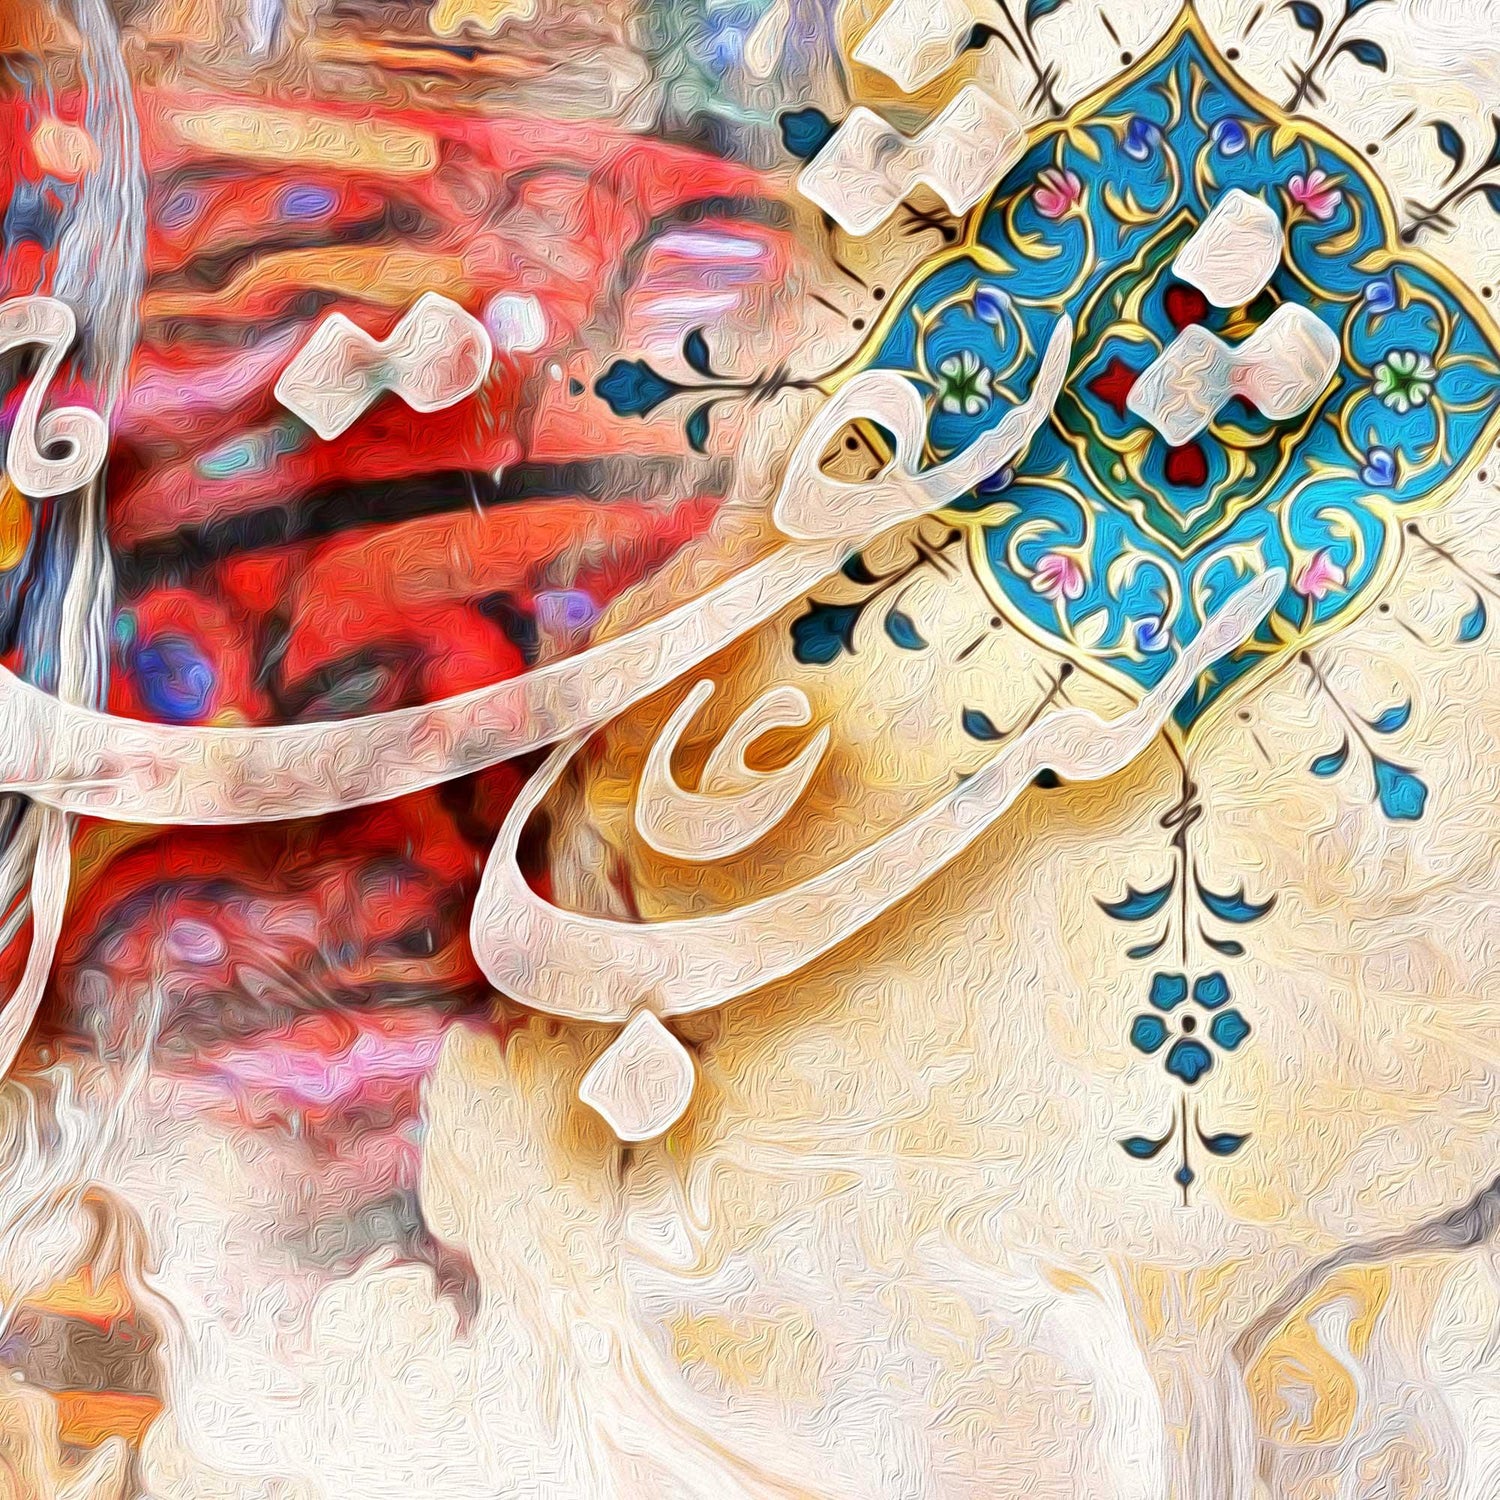 Lovers Night | Persian Wall Art | Persian Home Wall Decor - ORIAVI Persian Art, persian artwork for sale, persian calligraphy, persian calligraphy wall art, persian mix media wall art, persian painting, persian wall art